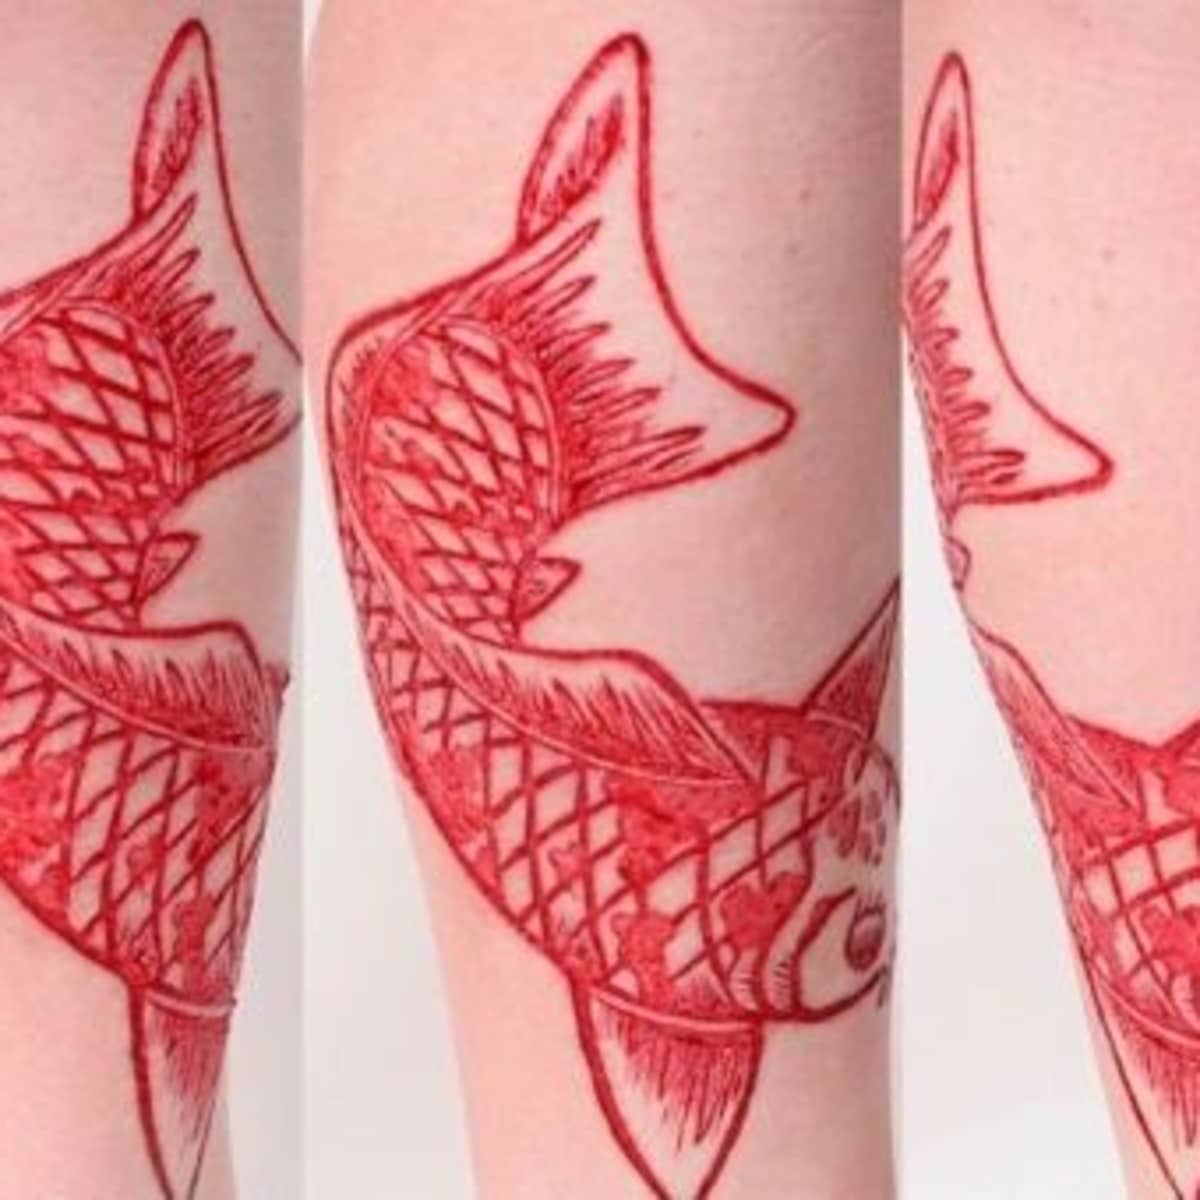 The Symbolism in my Tattoo  Randall J Greene Blog